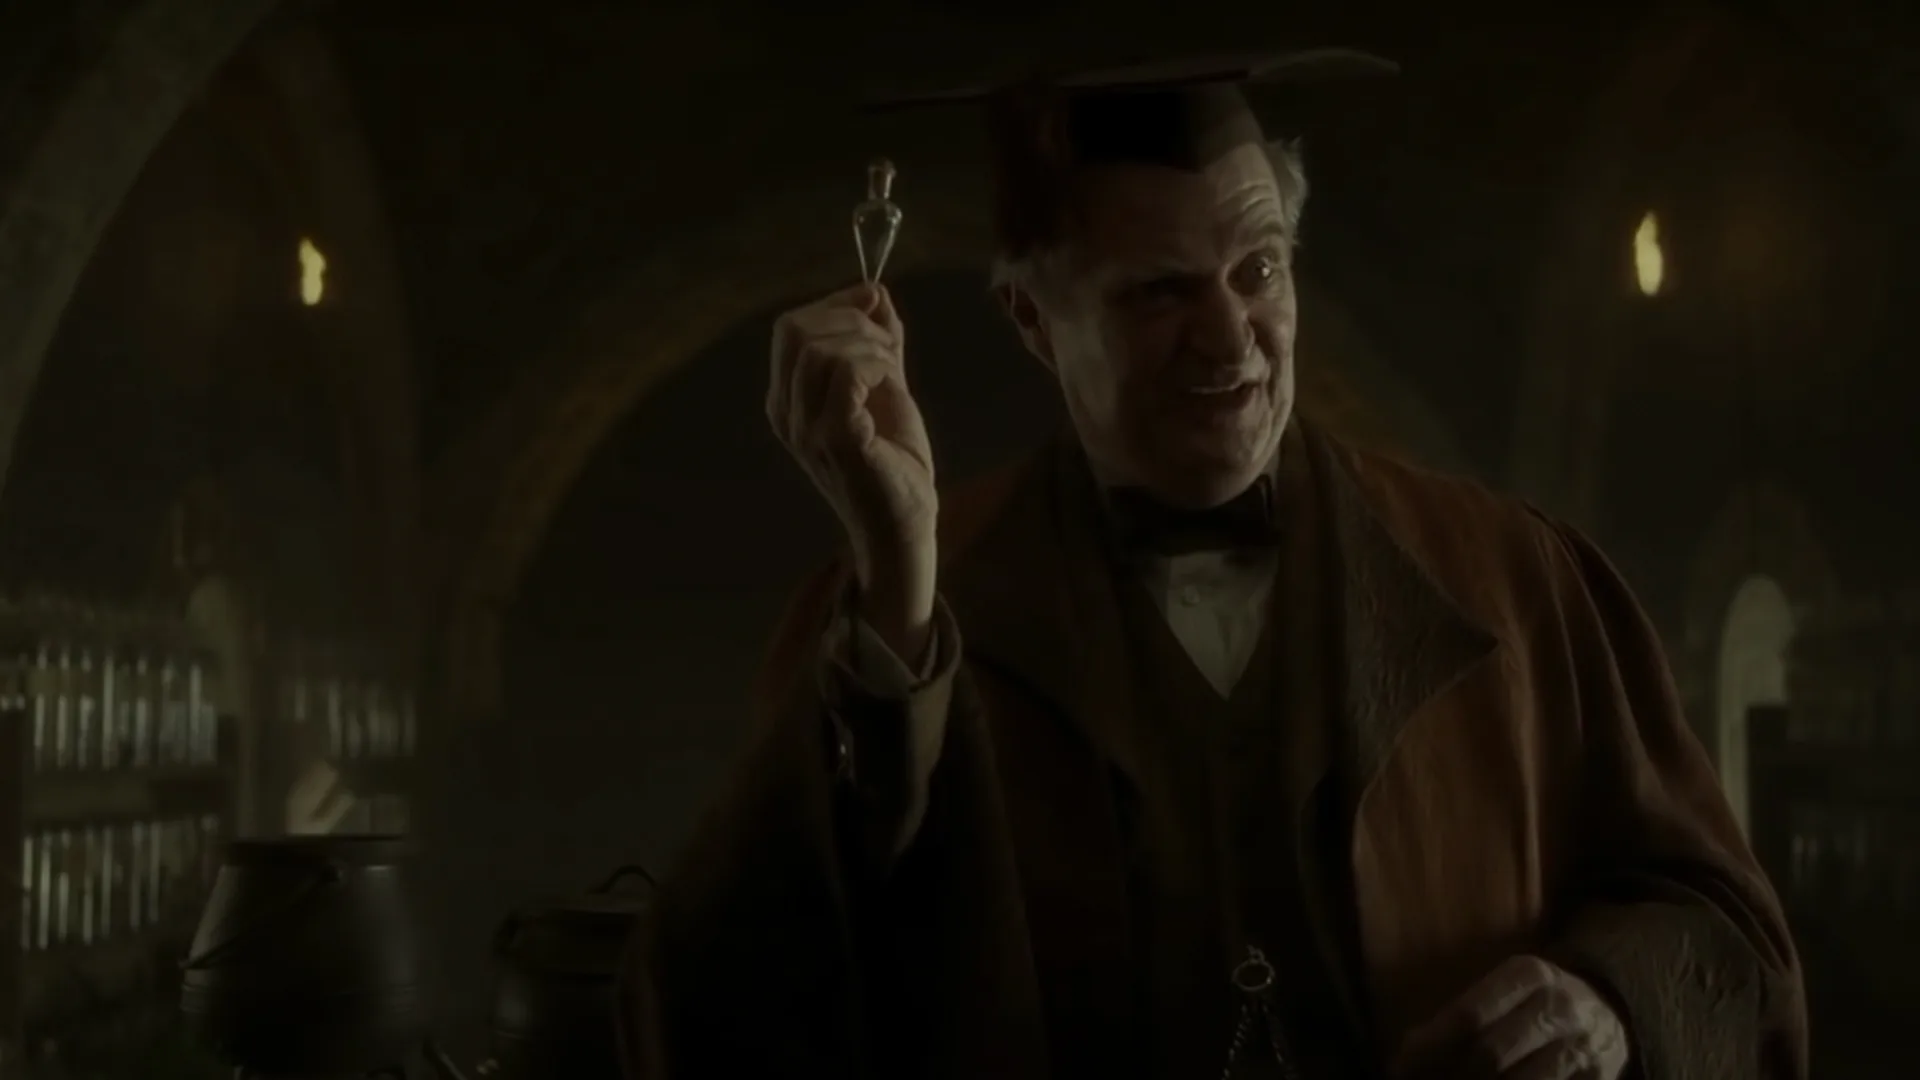 A teacher holding a potion